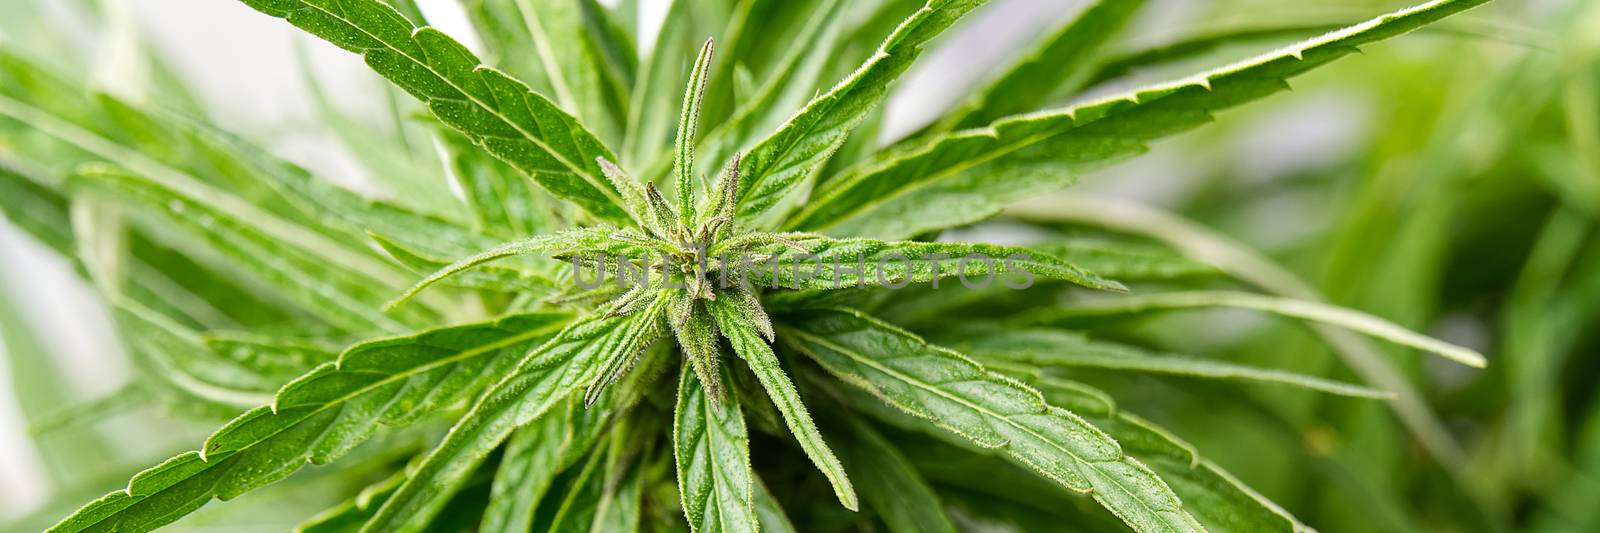 Fresh marijuana plant close-up. Cannabis green ripe Plant. by PhotoTime